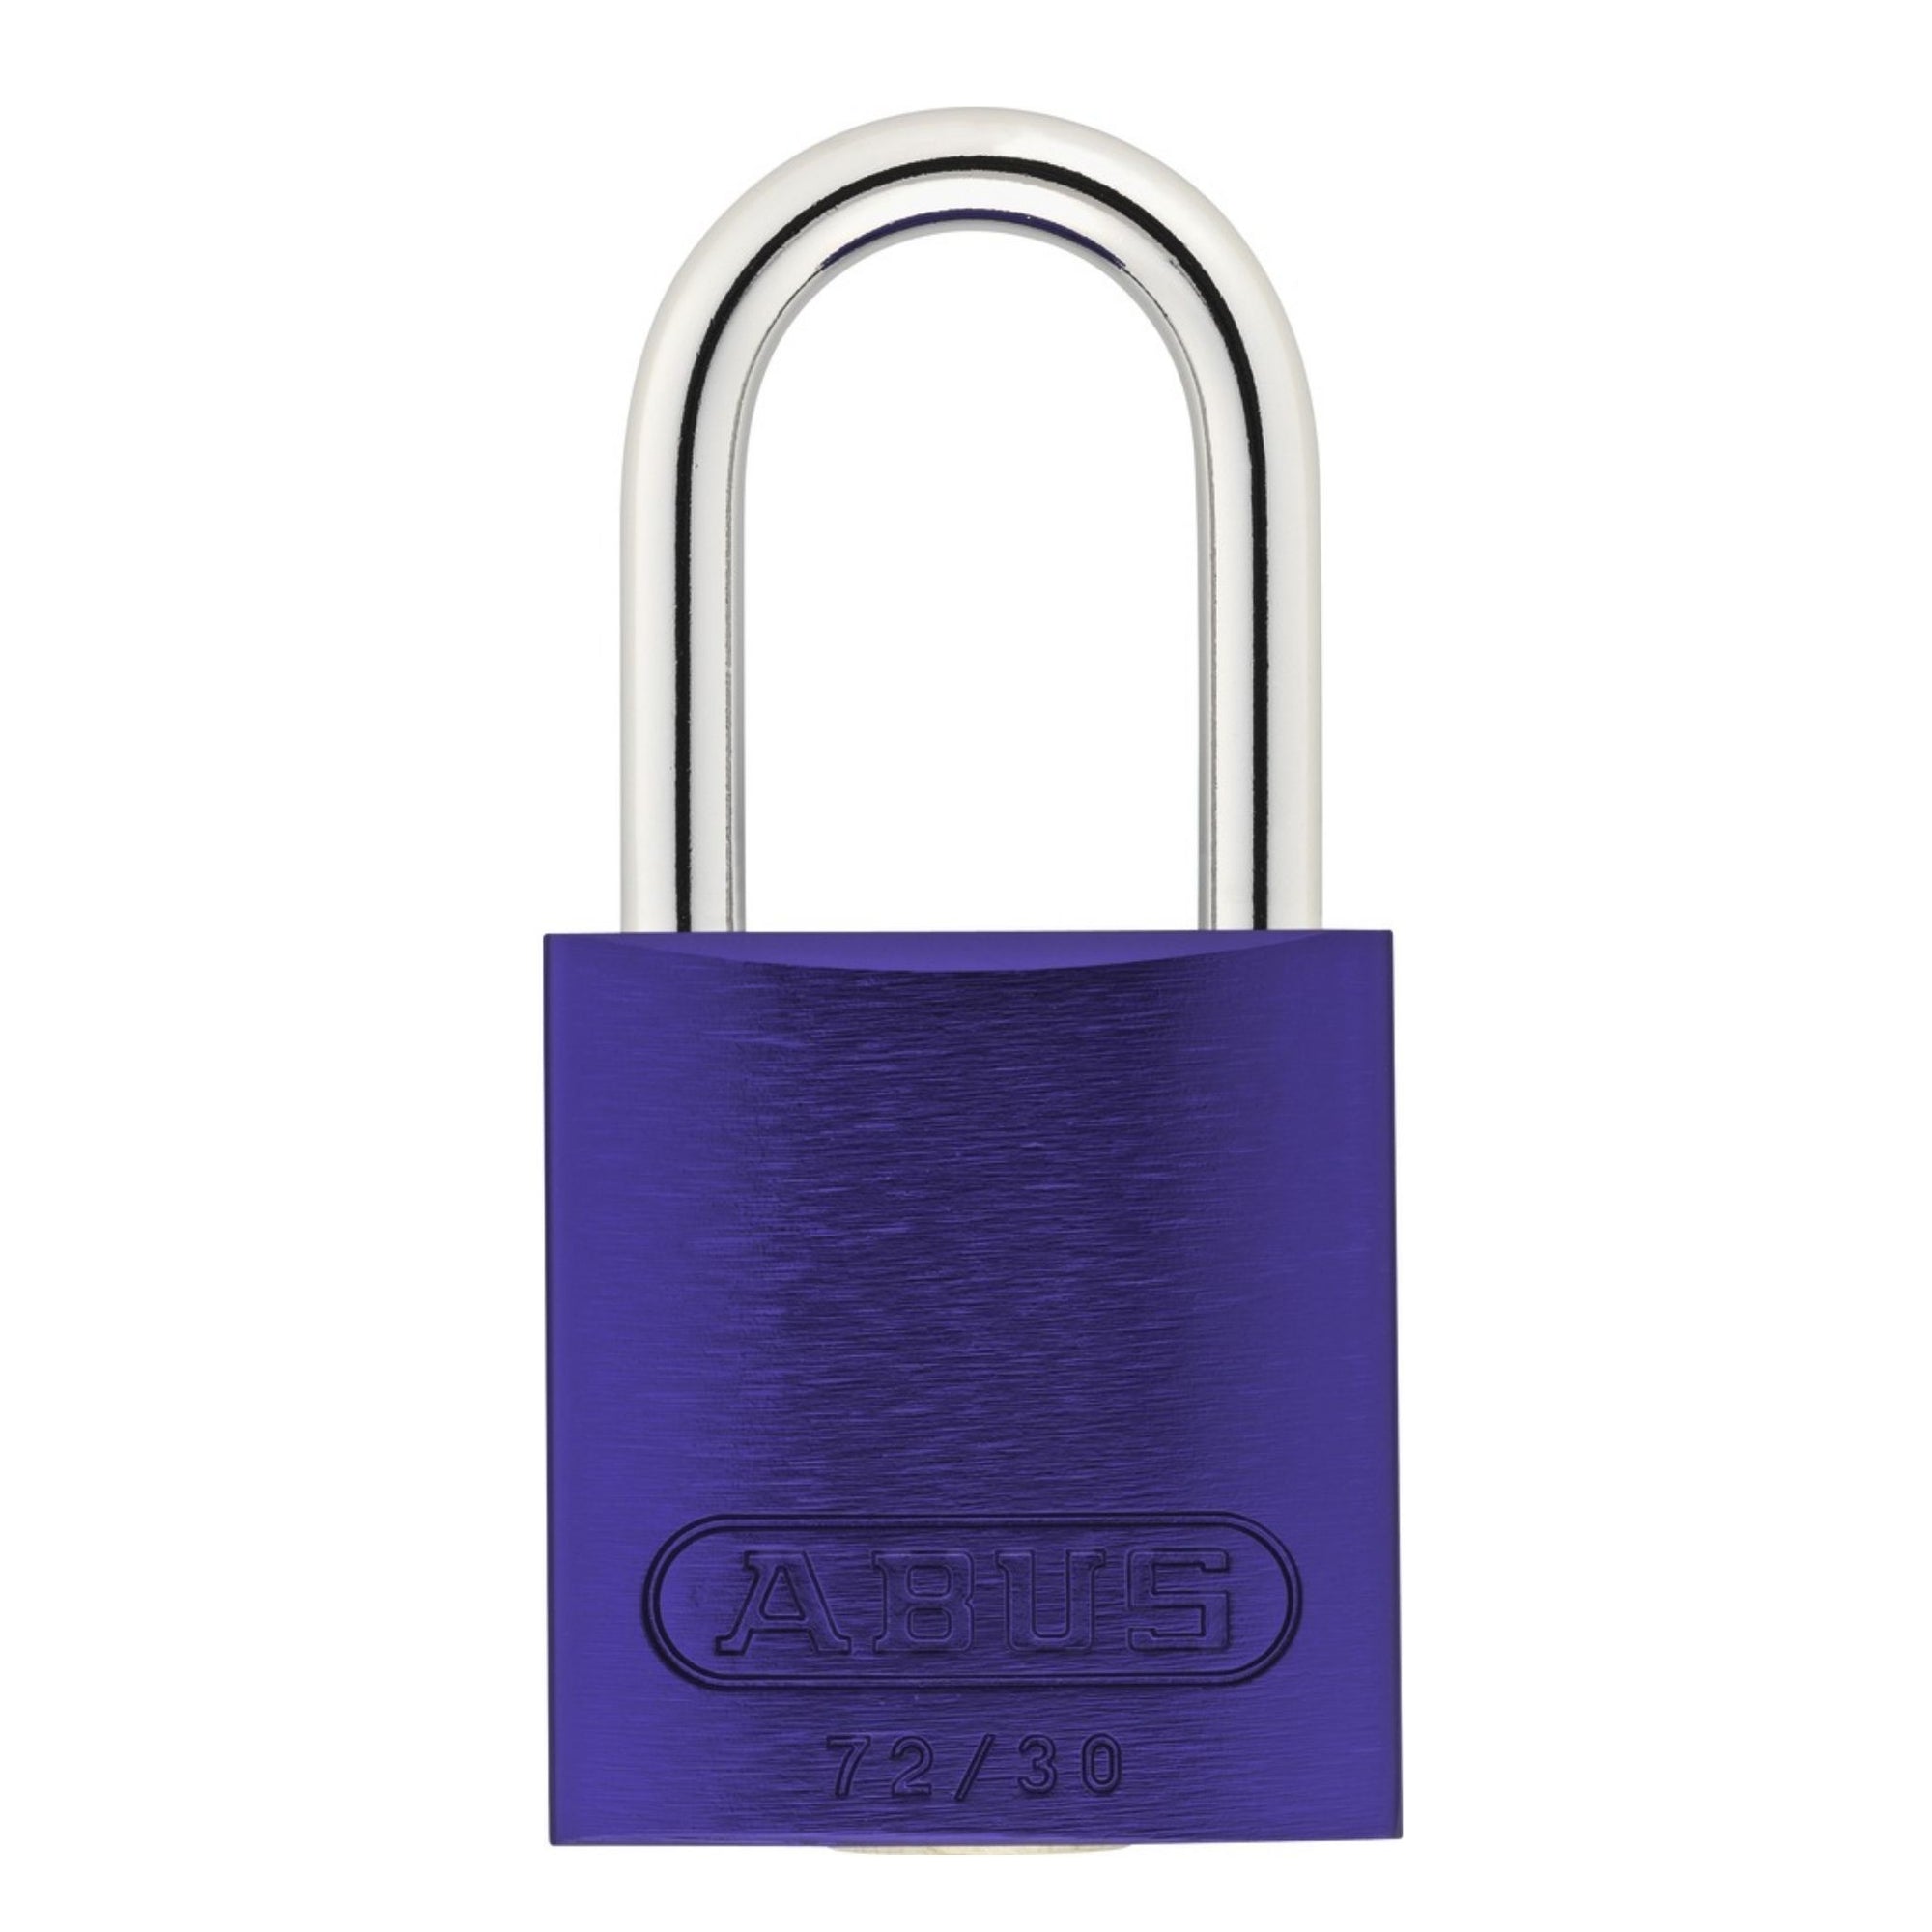 Abus 72/30 KA Purple Aluminum Safety Padlock Keyed Alike Lockout Tagout Locks - The Lock Source